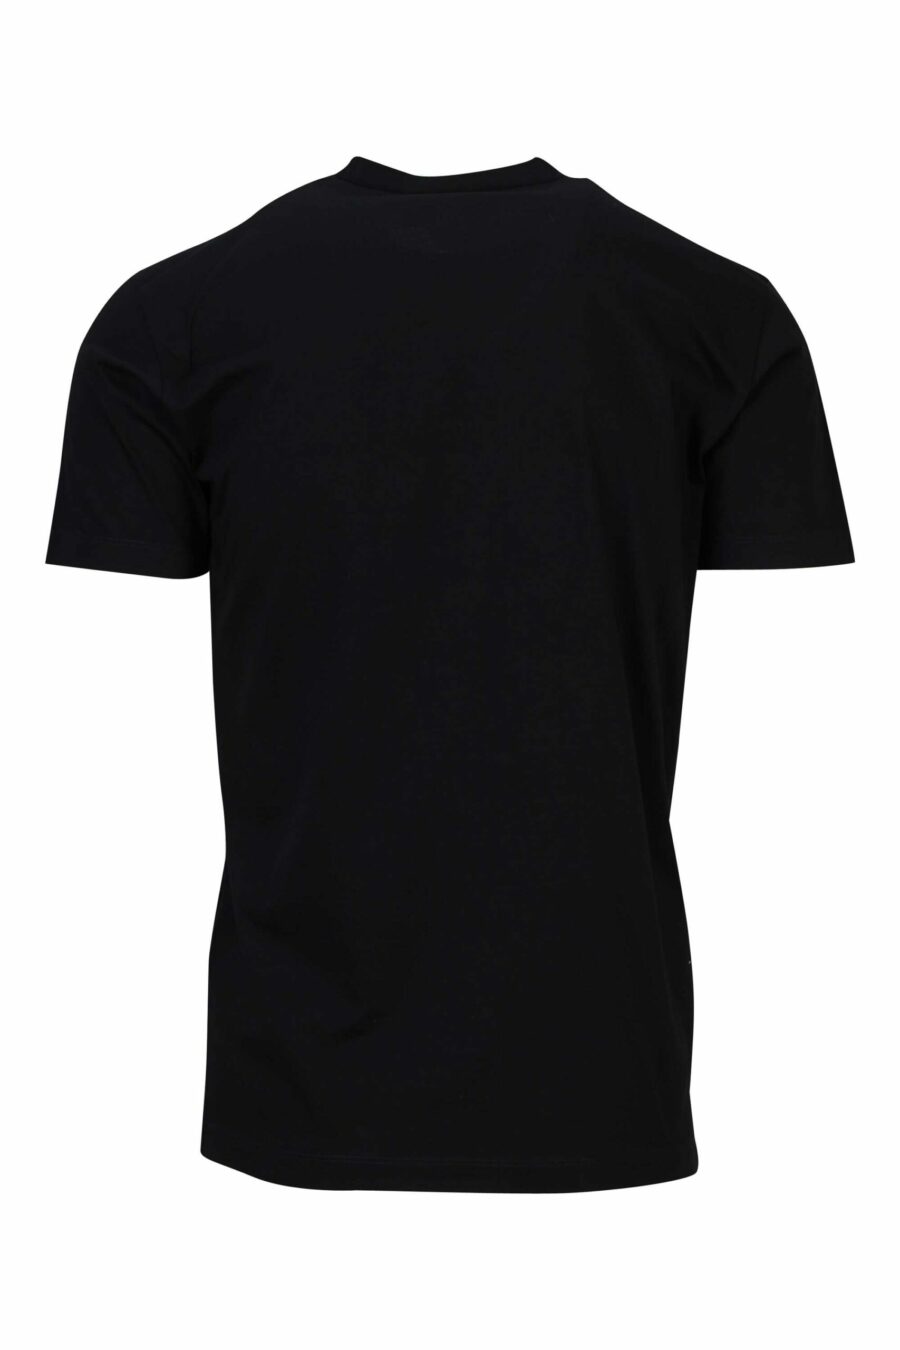 Camiseta negra con maxilogo negro en relieve - 8054148448158 1 scaled